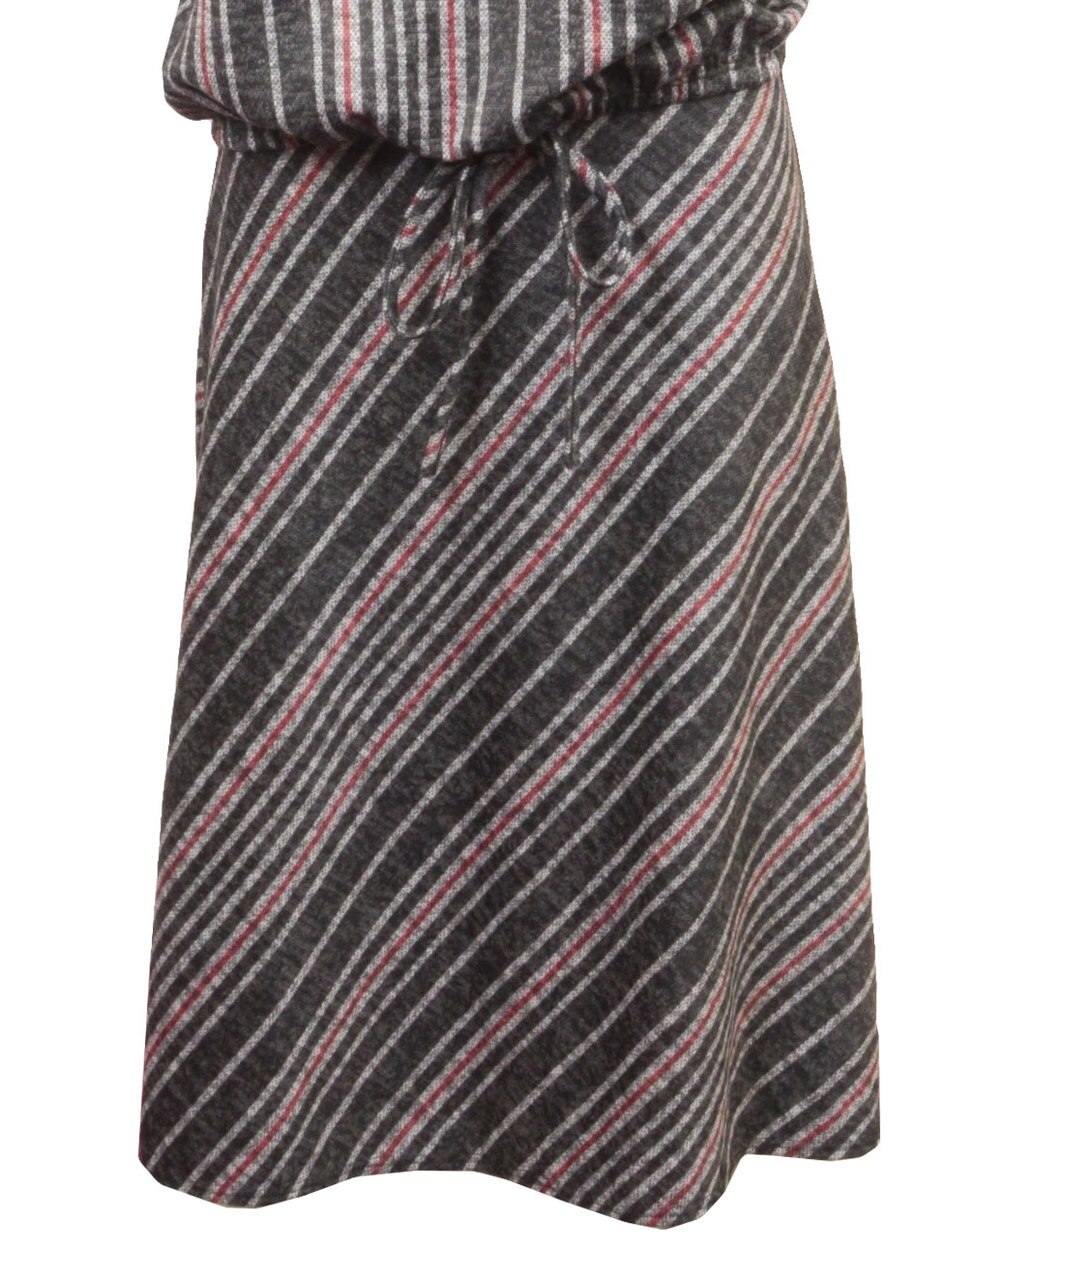 Objex Striped Skirt vendor-unknown